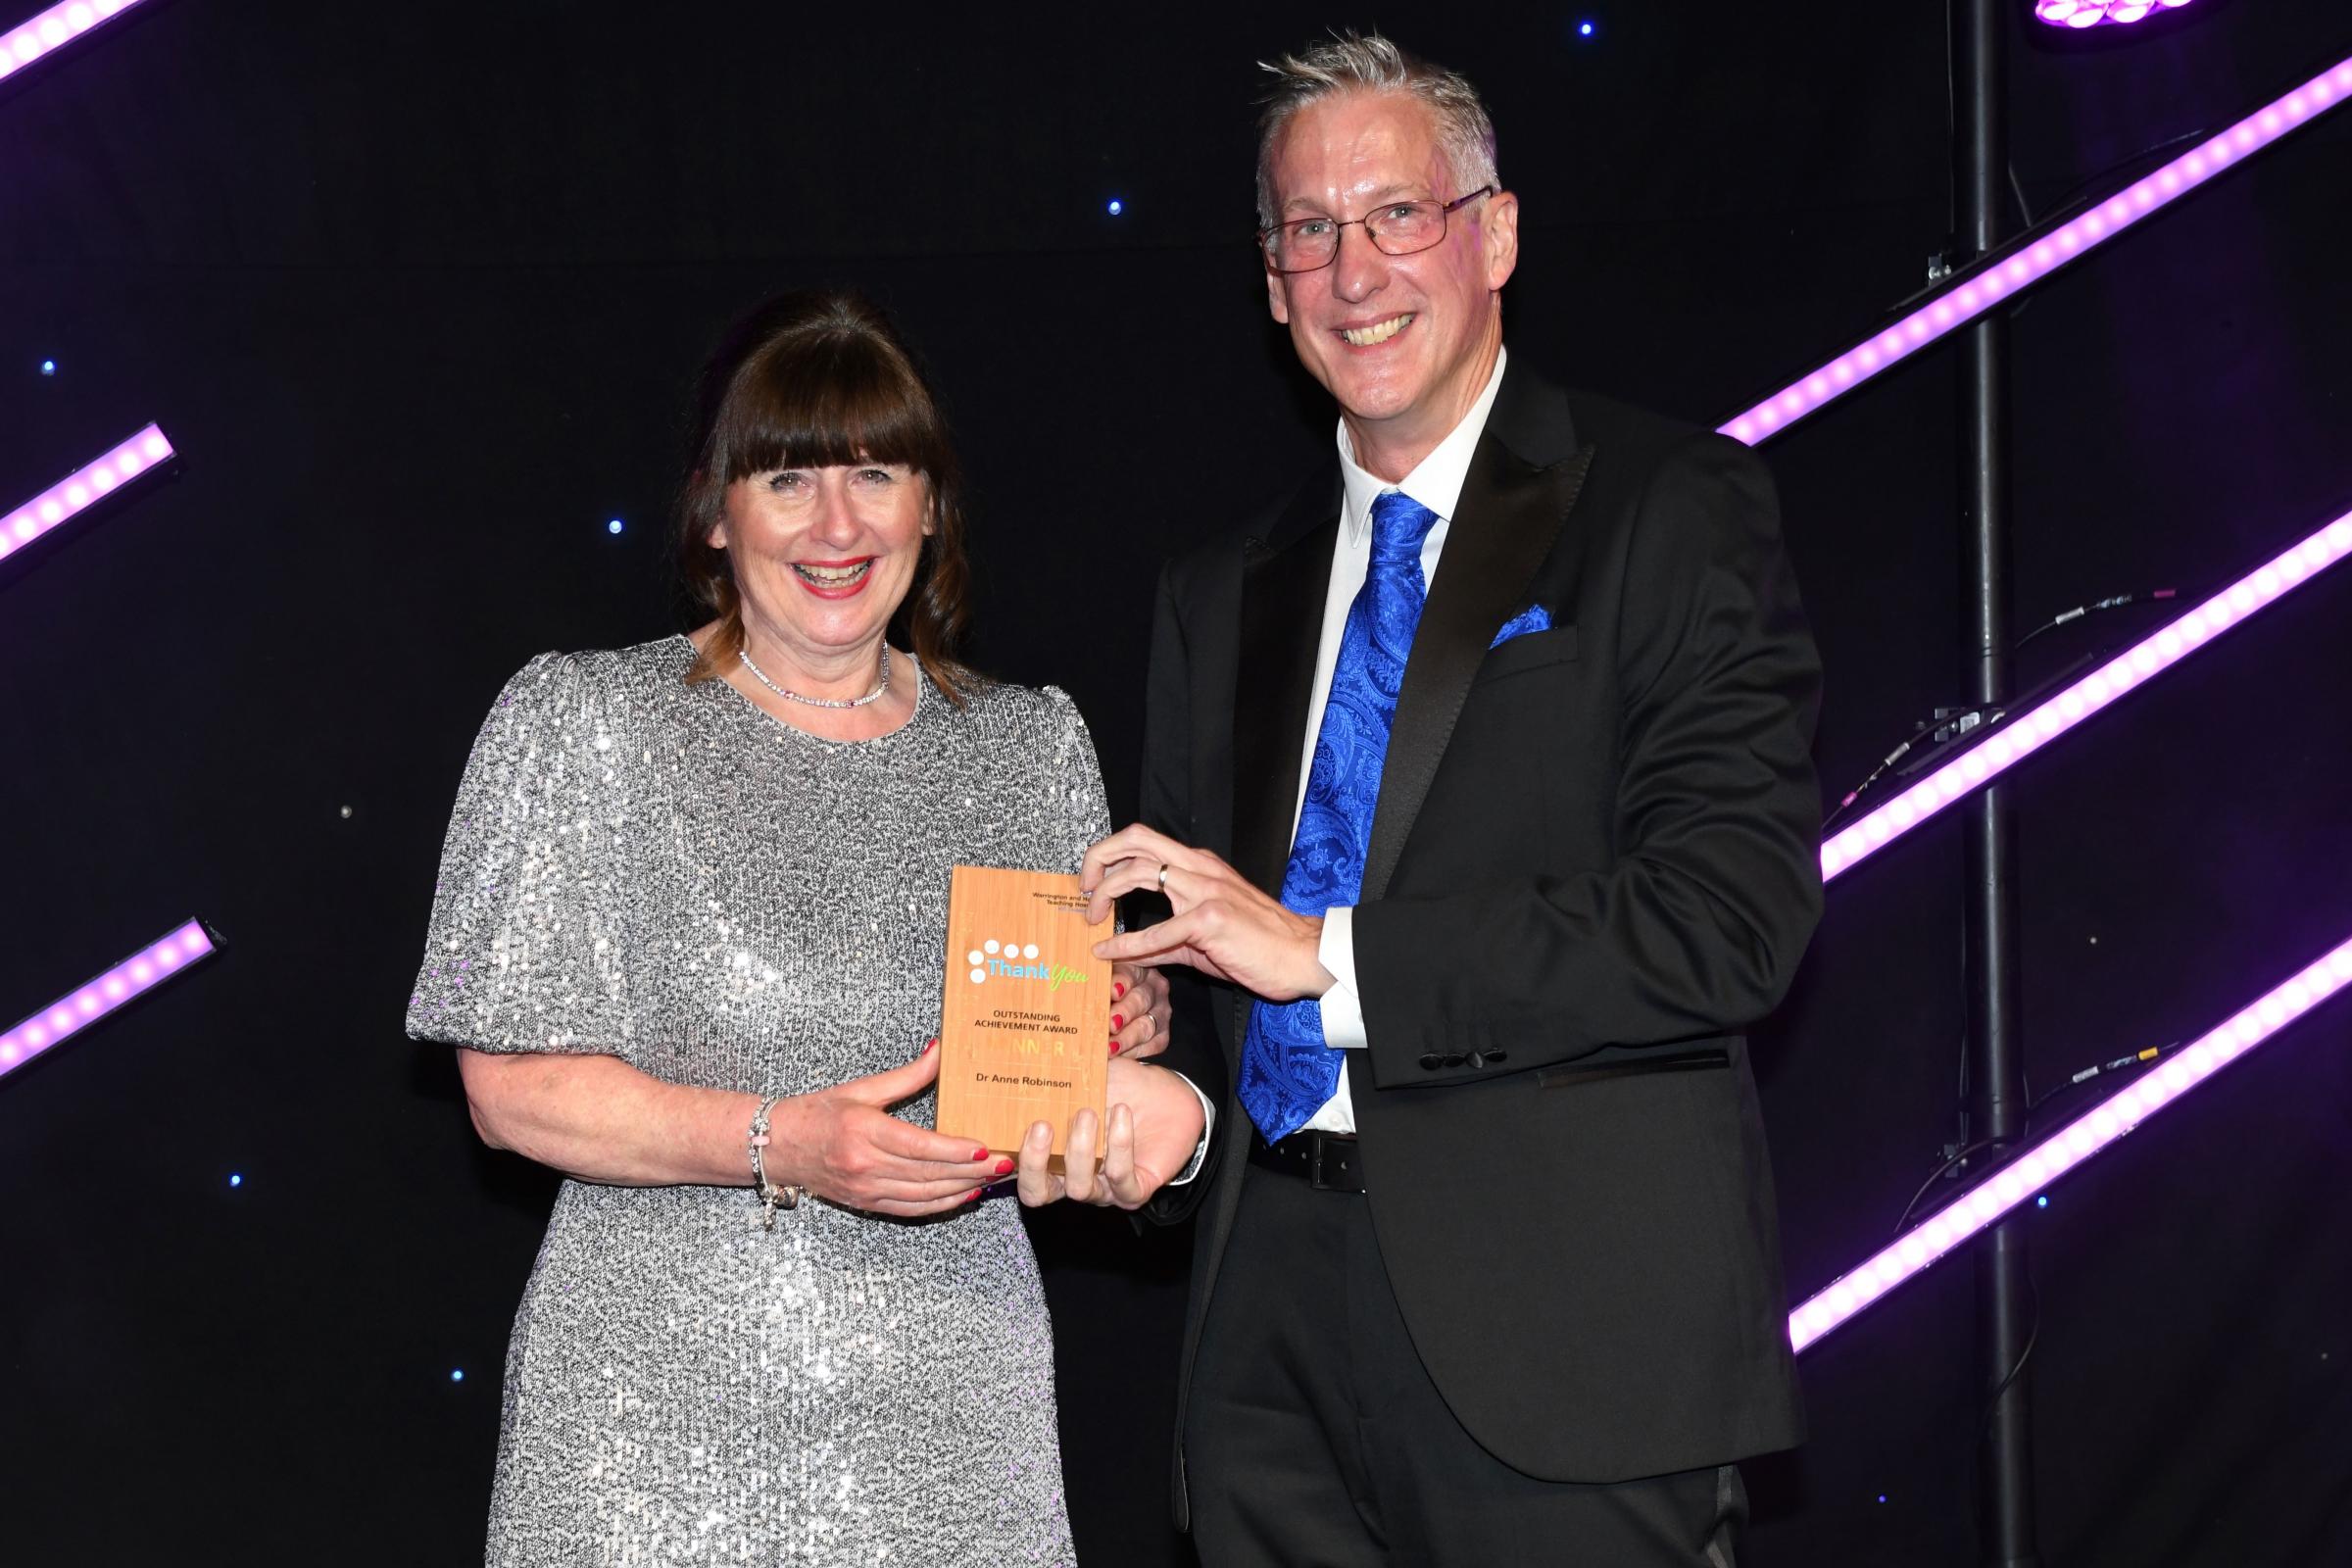 Outstanding achievement winner Dr Anne Robinson